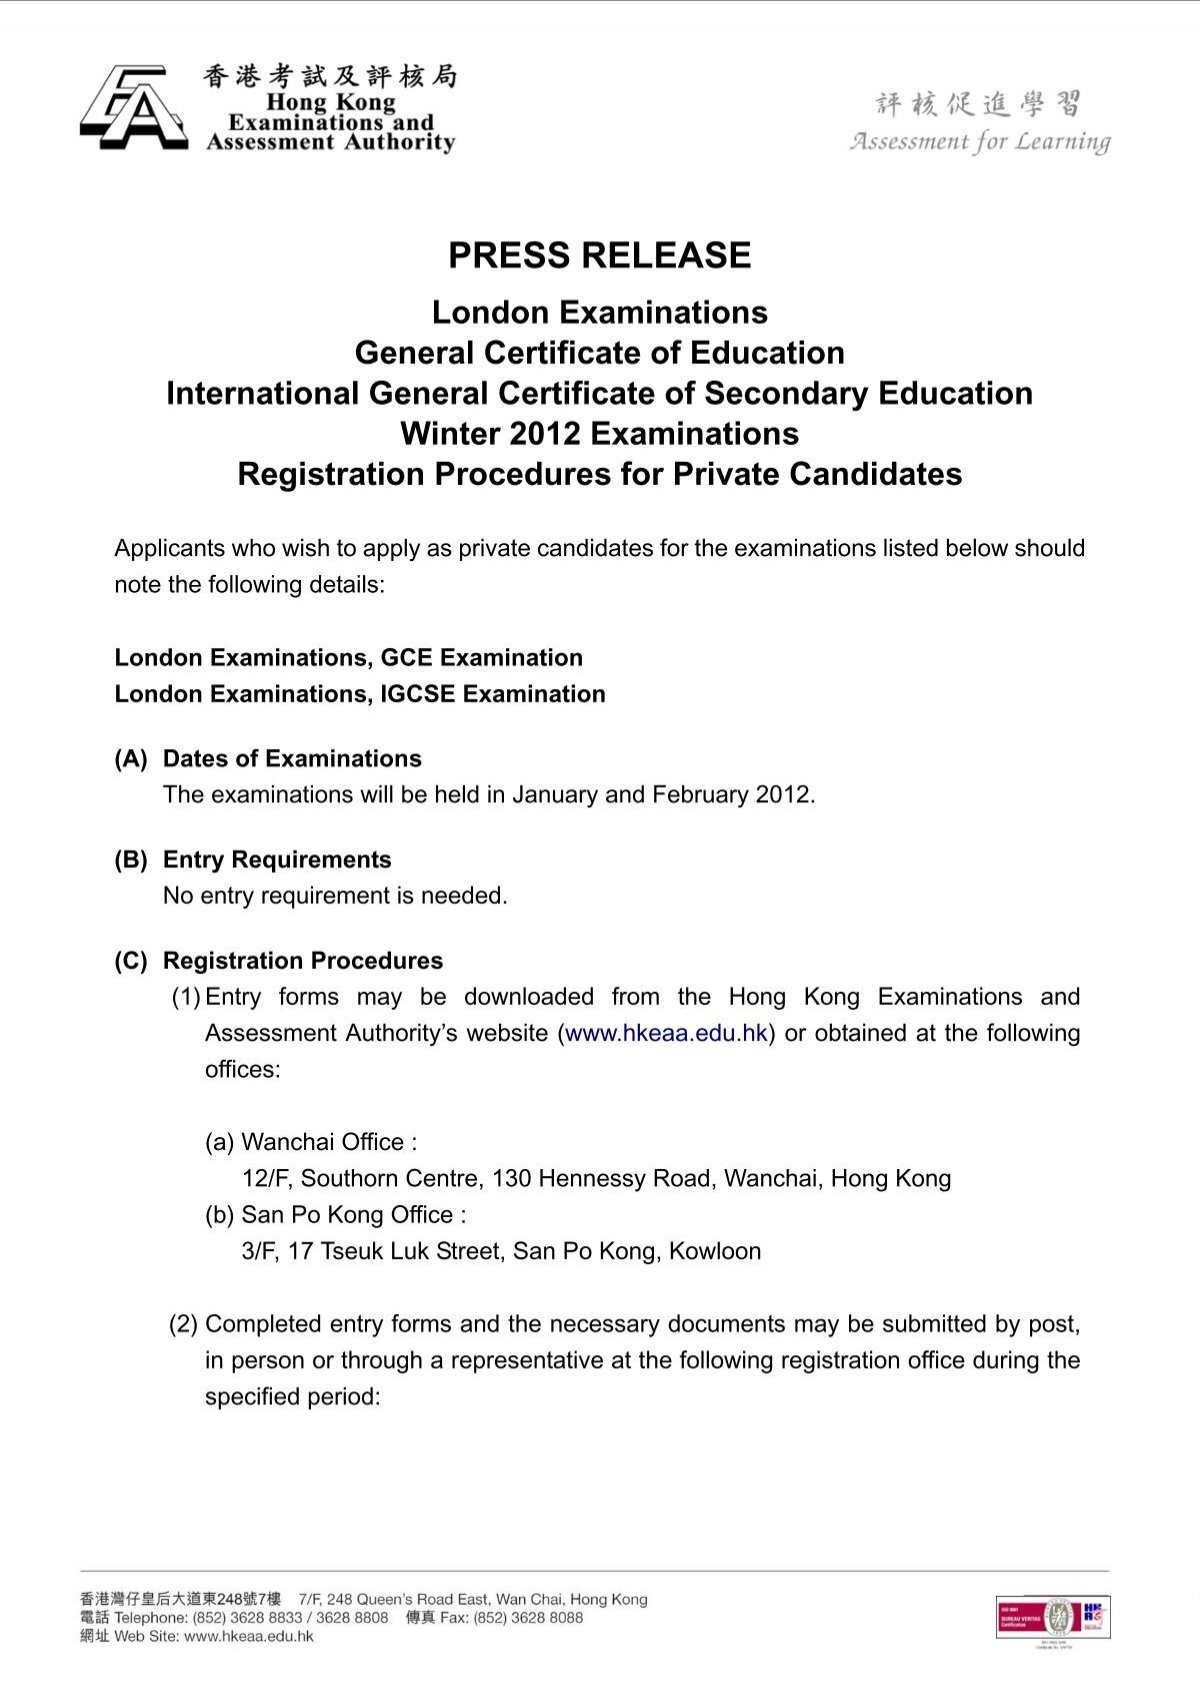 General Certificate of Education International General Certificate of